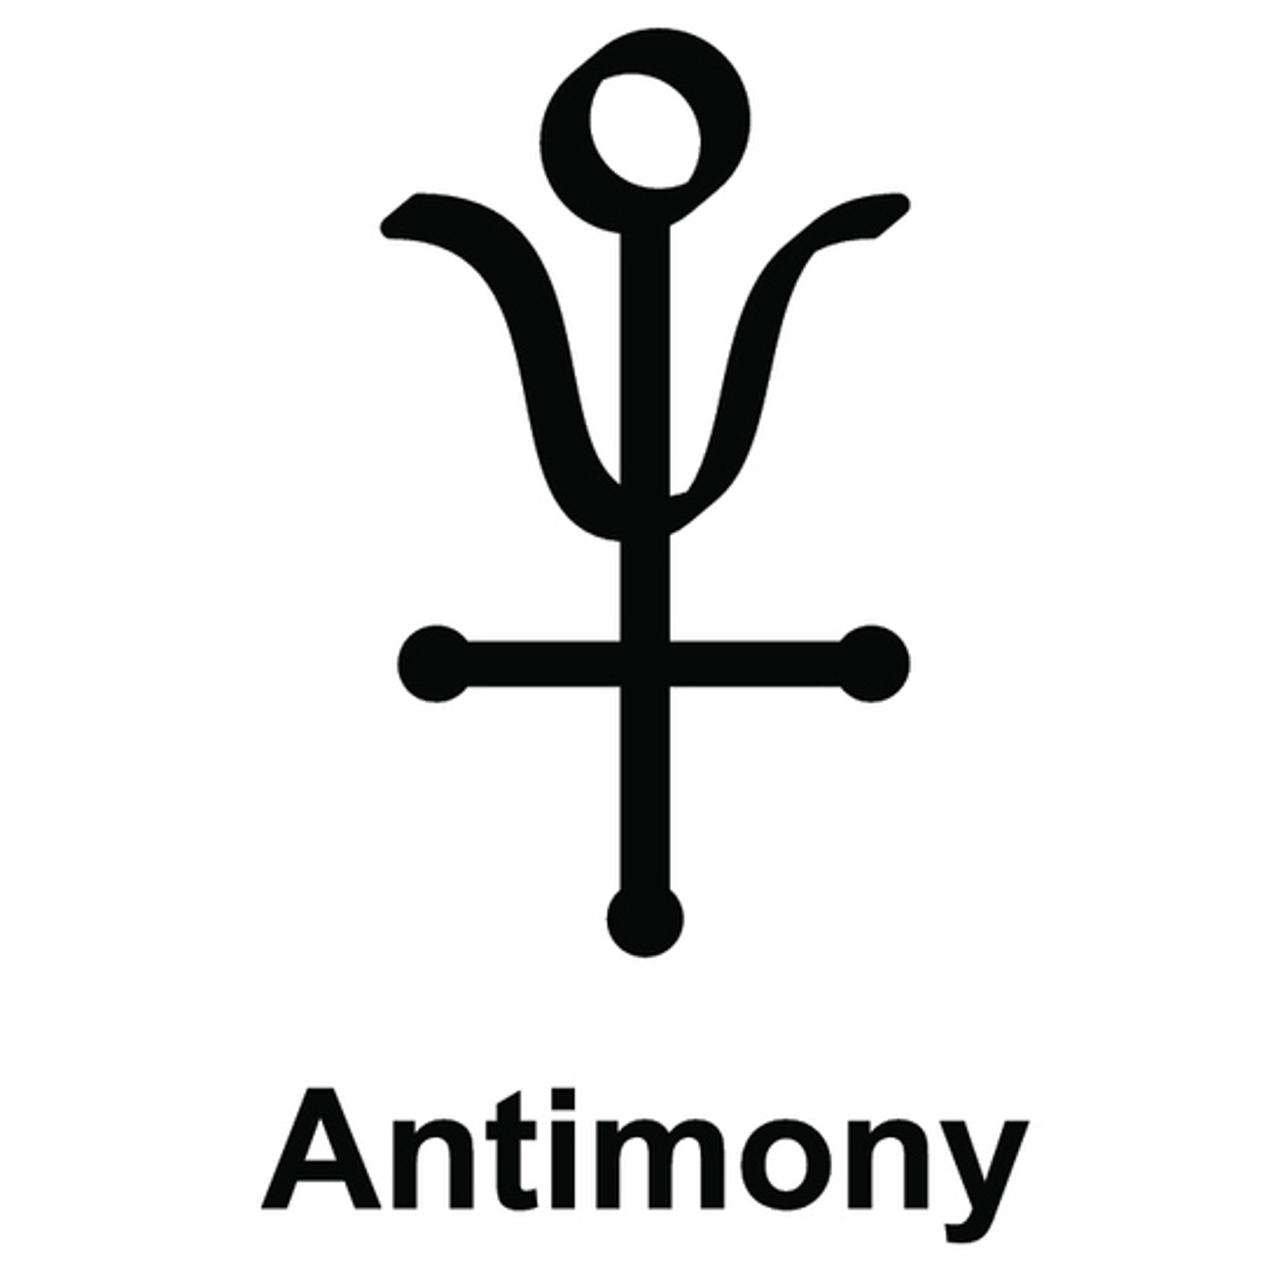 alchemist symbols and purposes